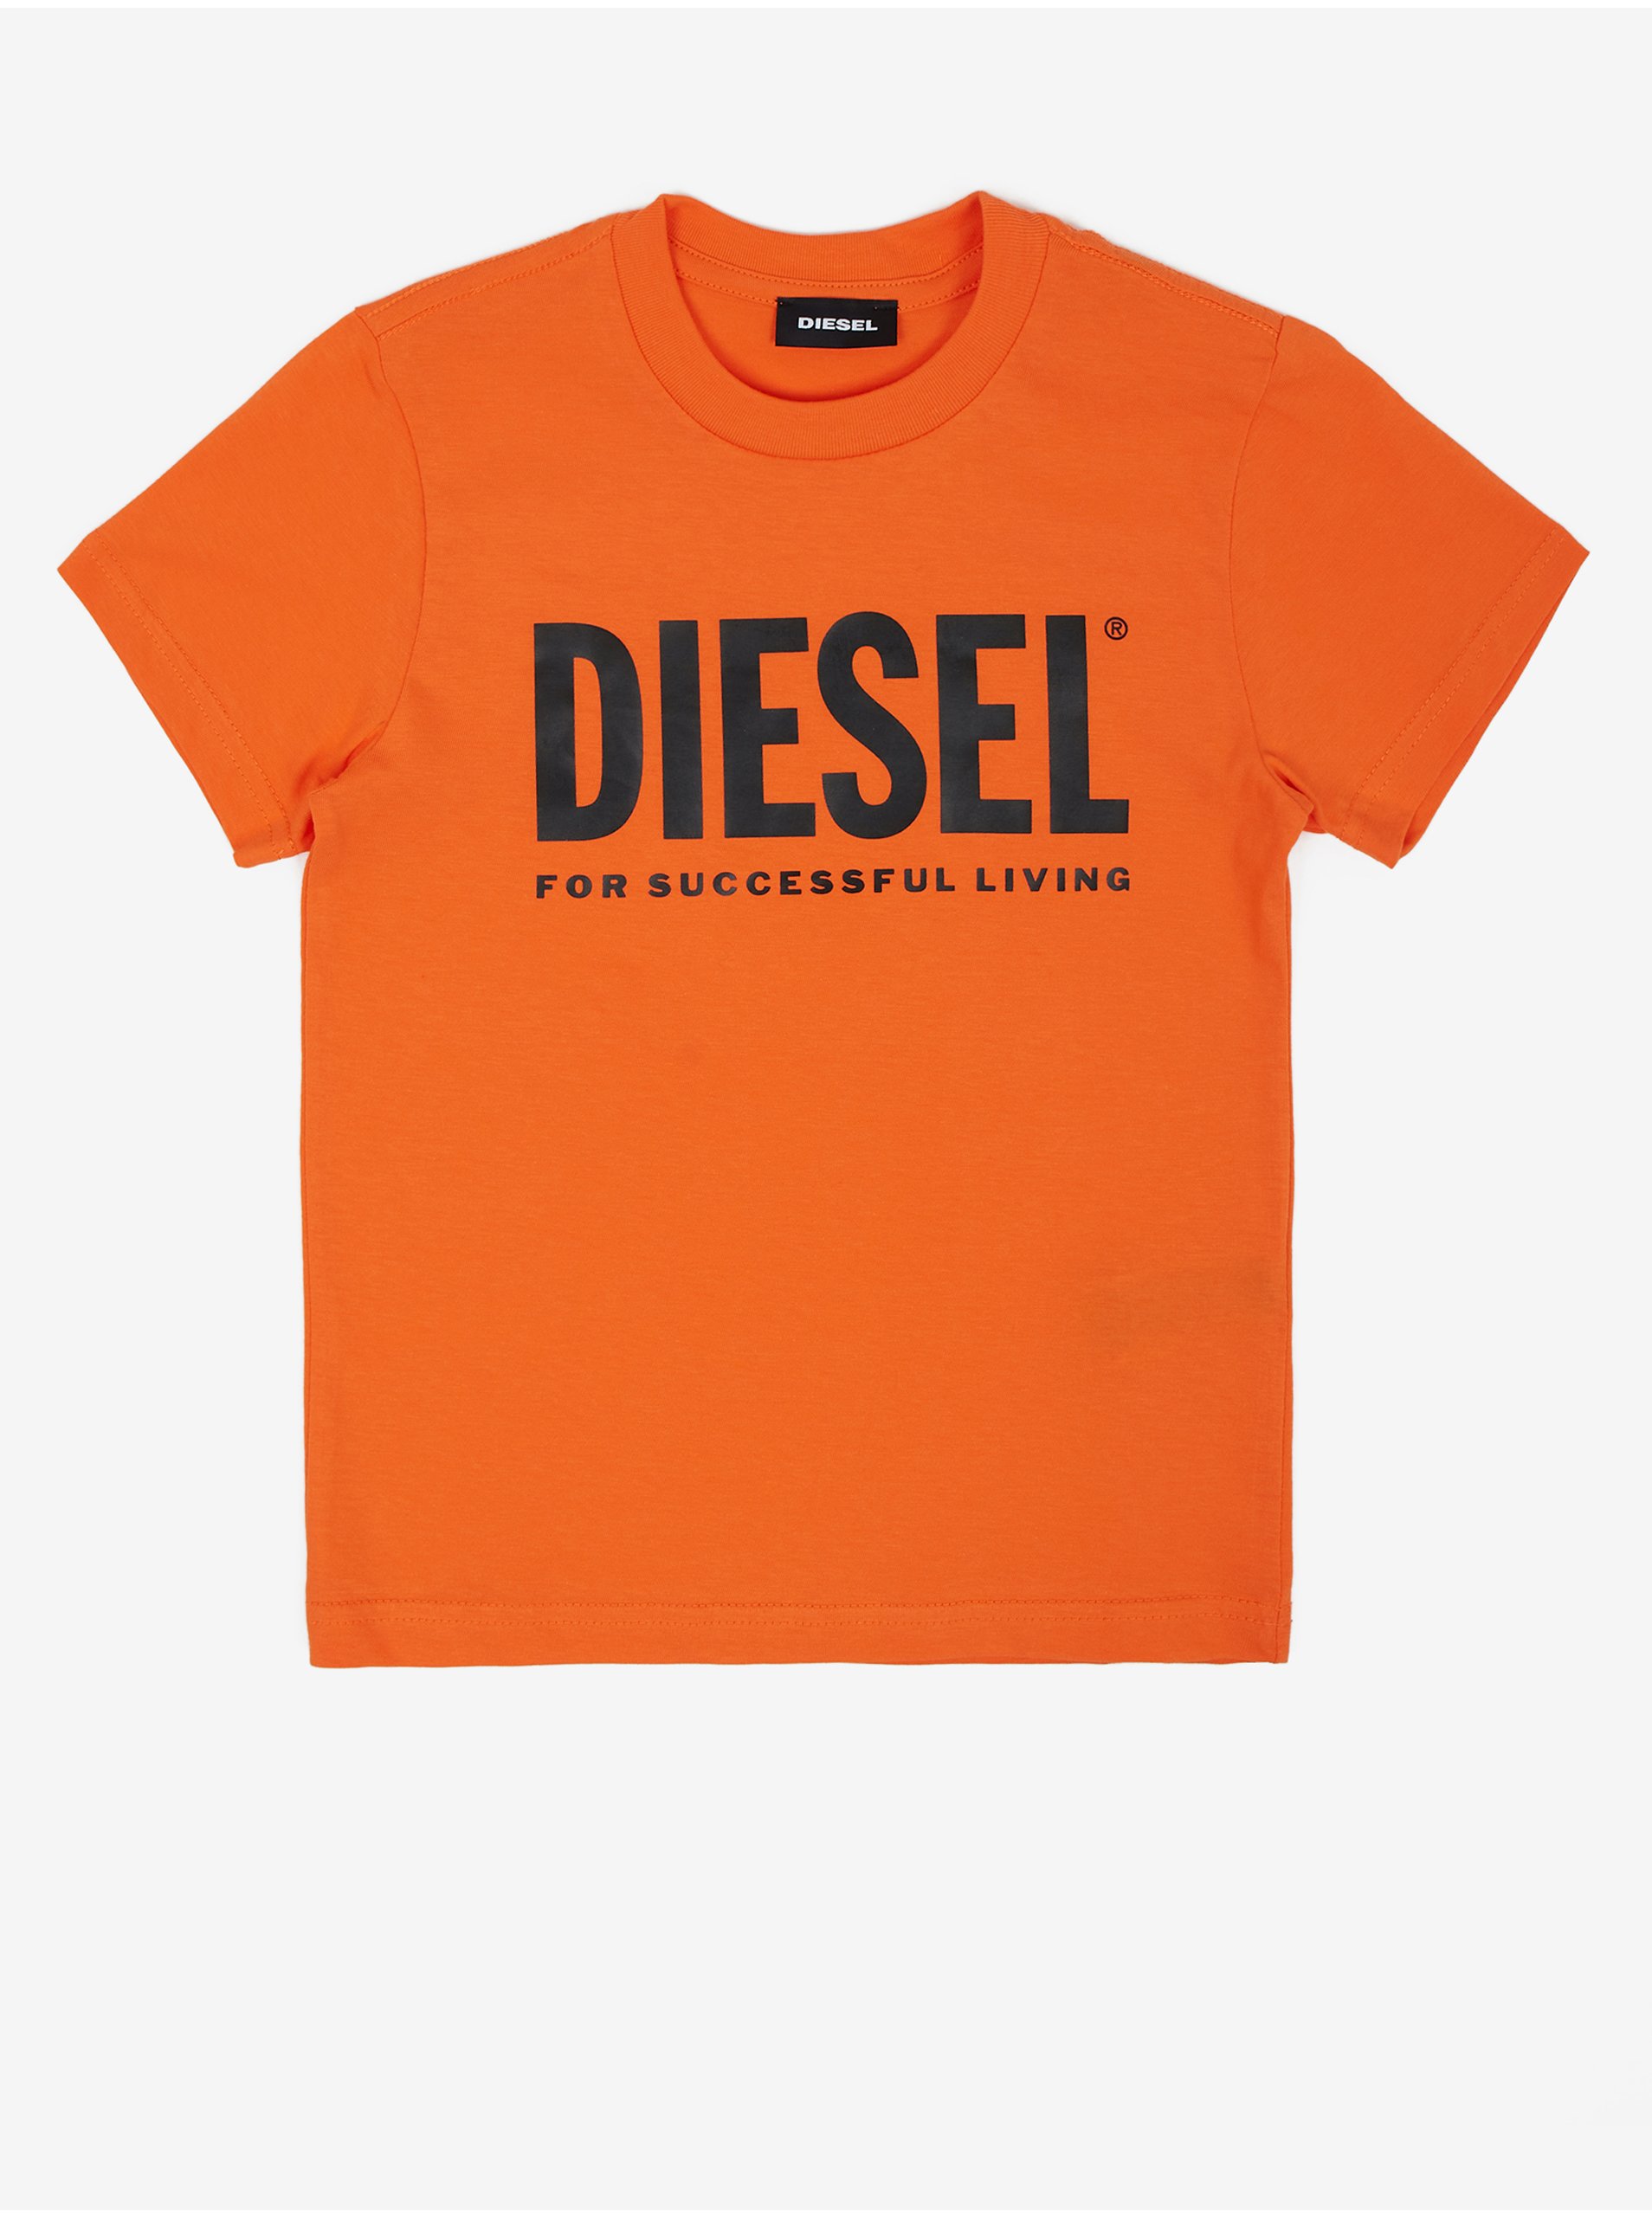 Lacno Diesel - oranžová